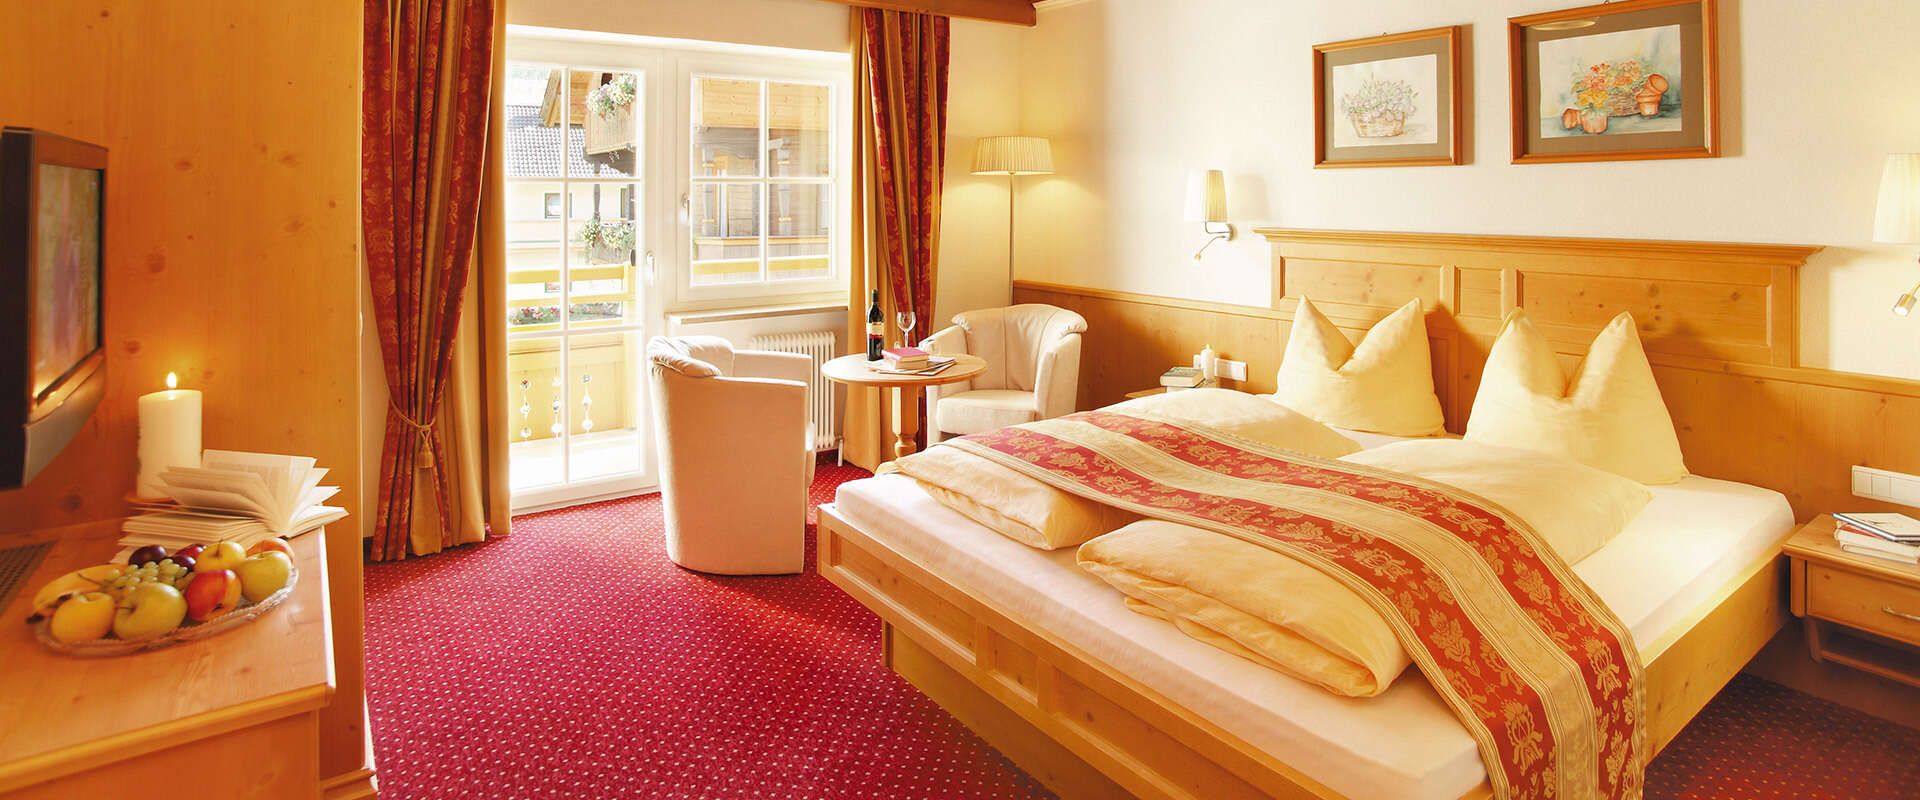 Komfortzimmer im Hotel Alpenherz, Tirol